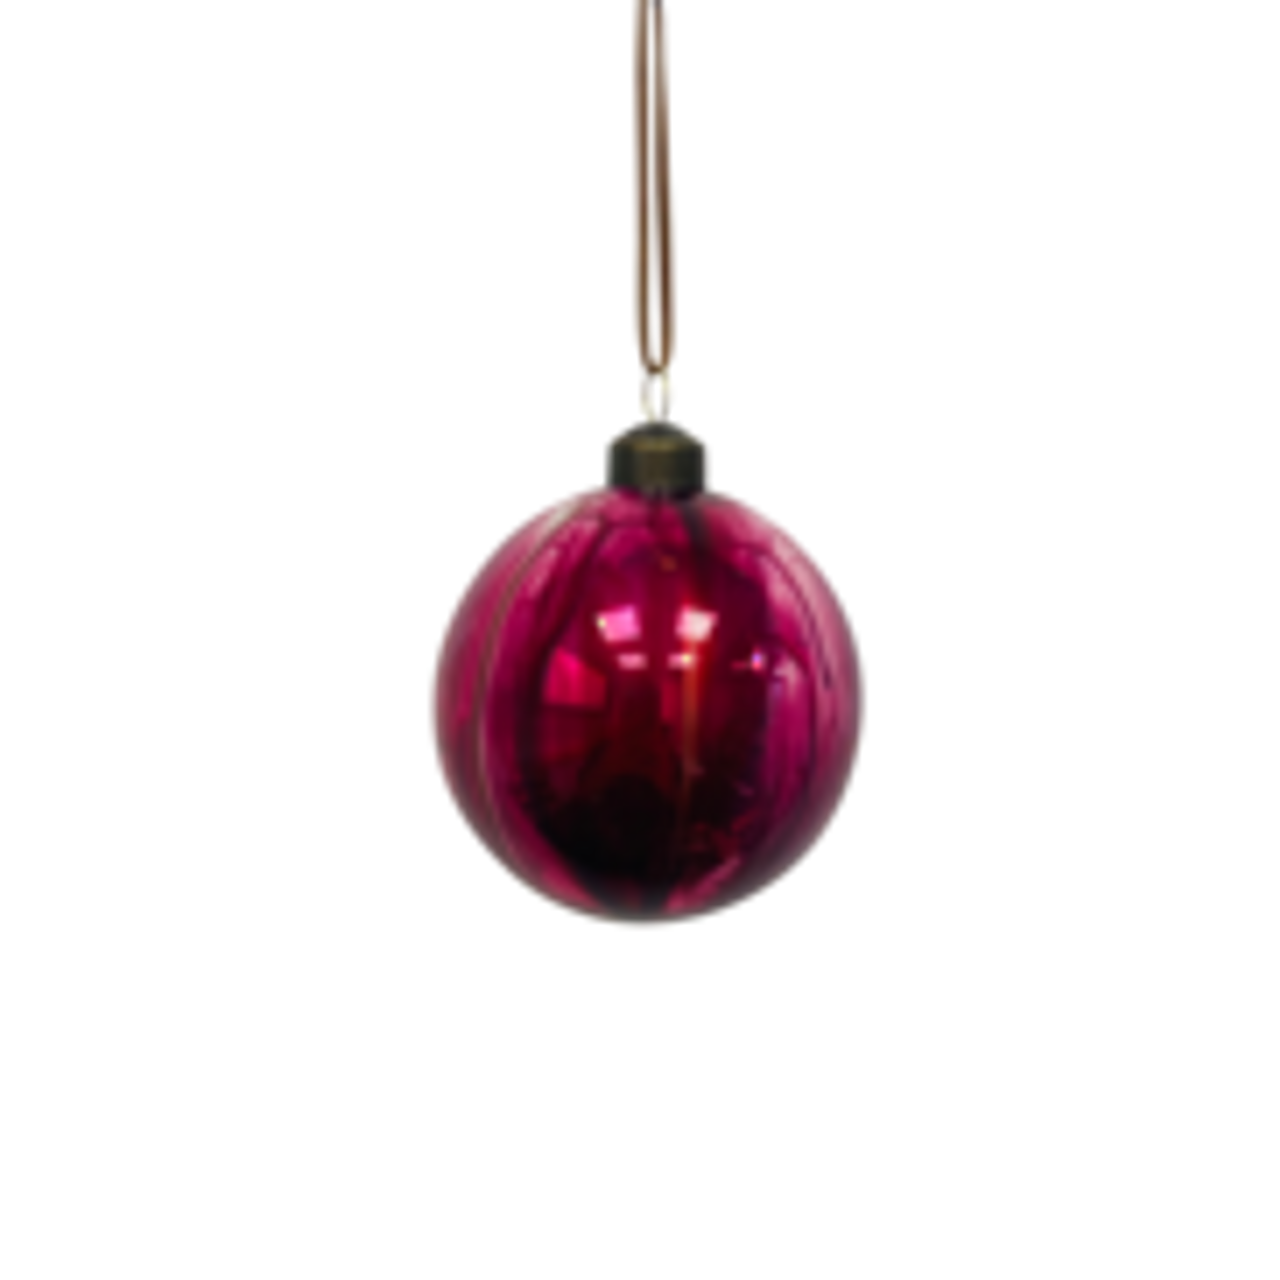 8cm D Pink Marbled Glass Ball